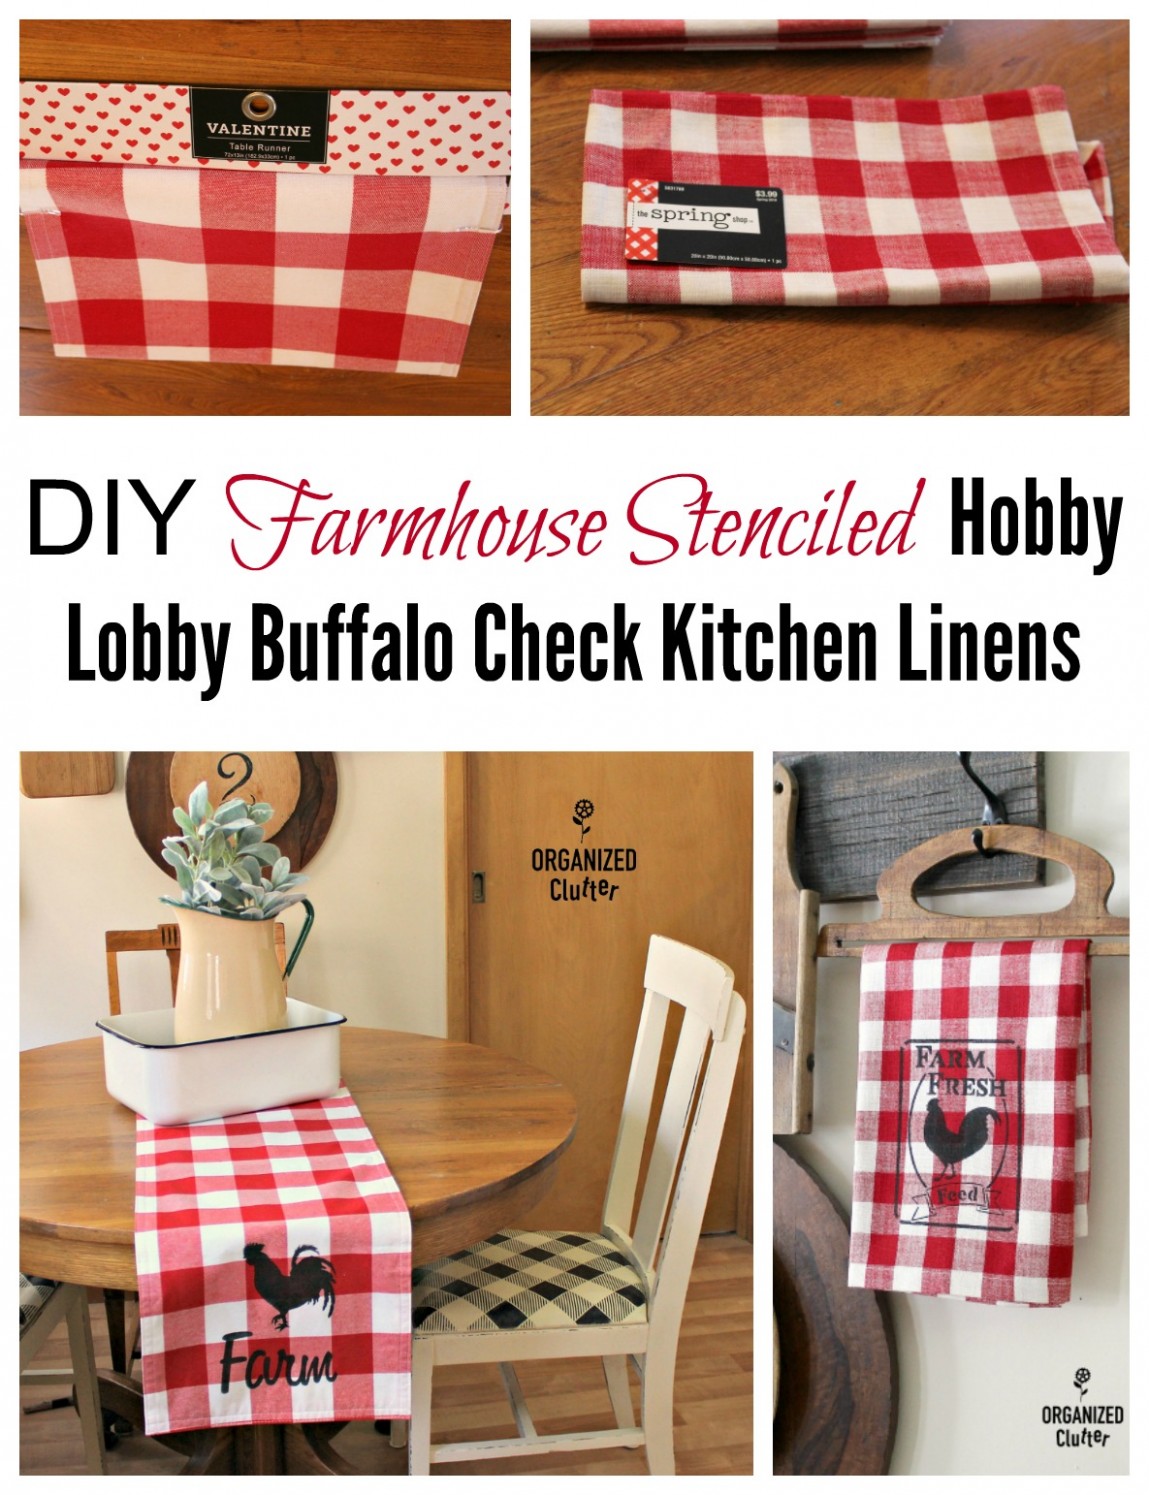 Diy Farmhouse Style Stenciled Hobby Lobby Buffalo Check Kitchen ..